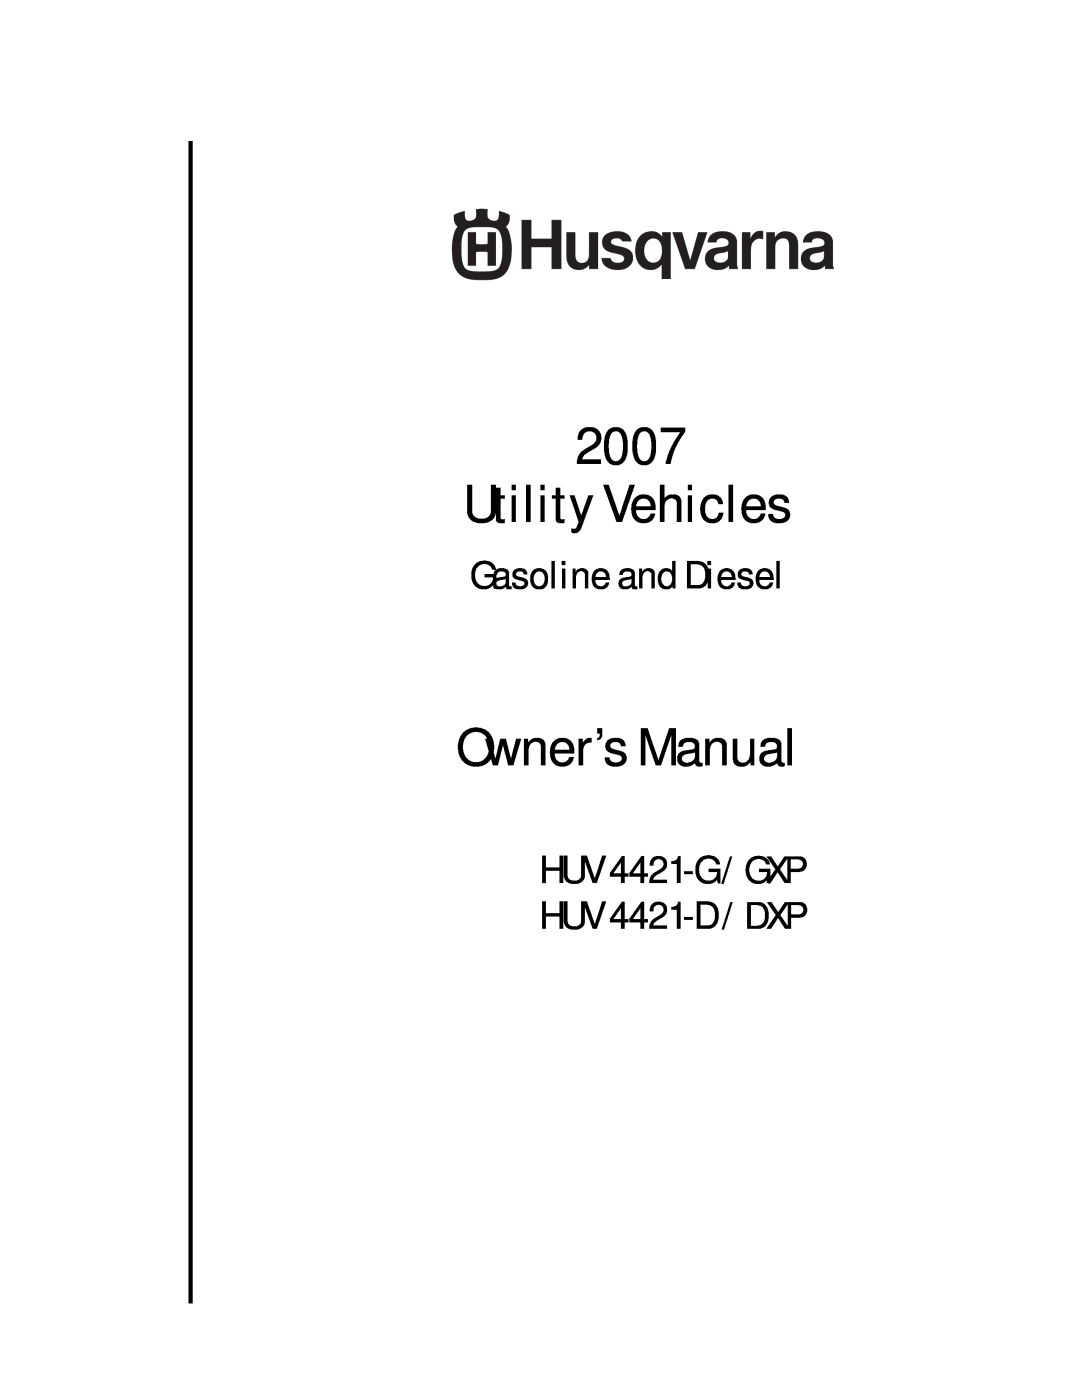 Husqvarna HUV 4421-D / DXP, HUV 4421-G / GXP owner manual Utility Vehicles, Owner’s Manual, Gasoline and Diesel 